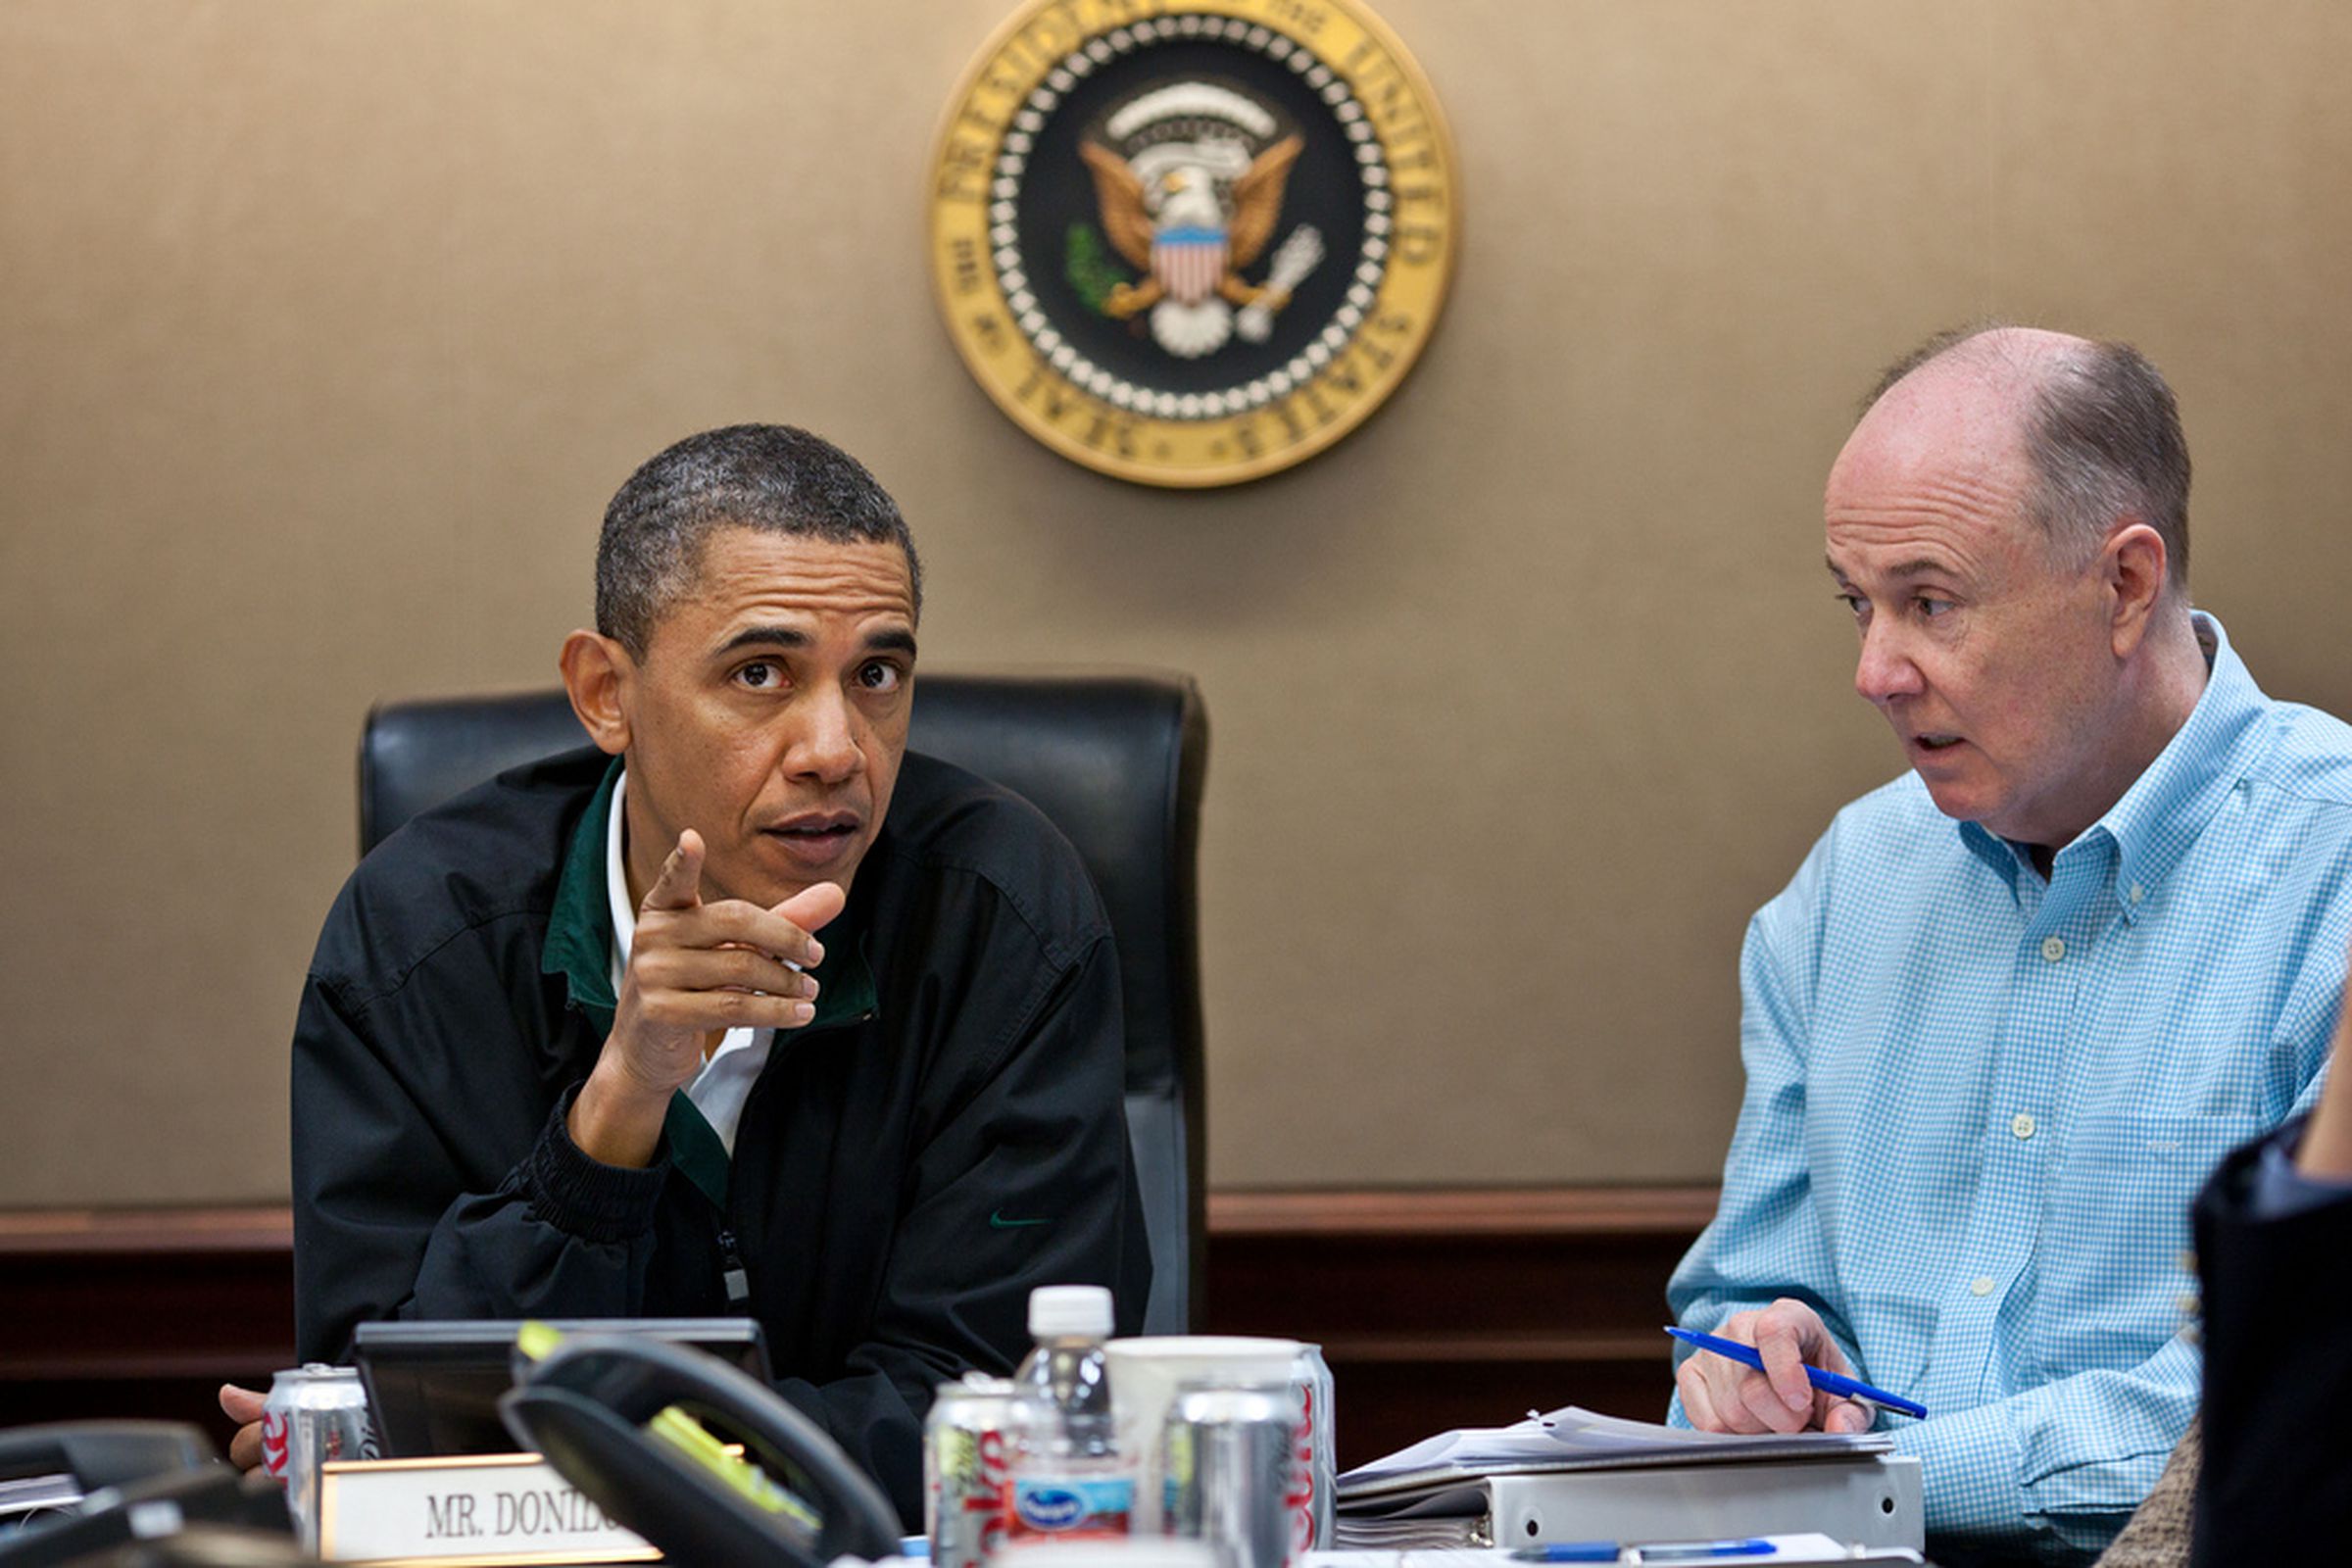 President Obama and national security advisor Tom Donilon